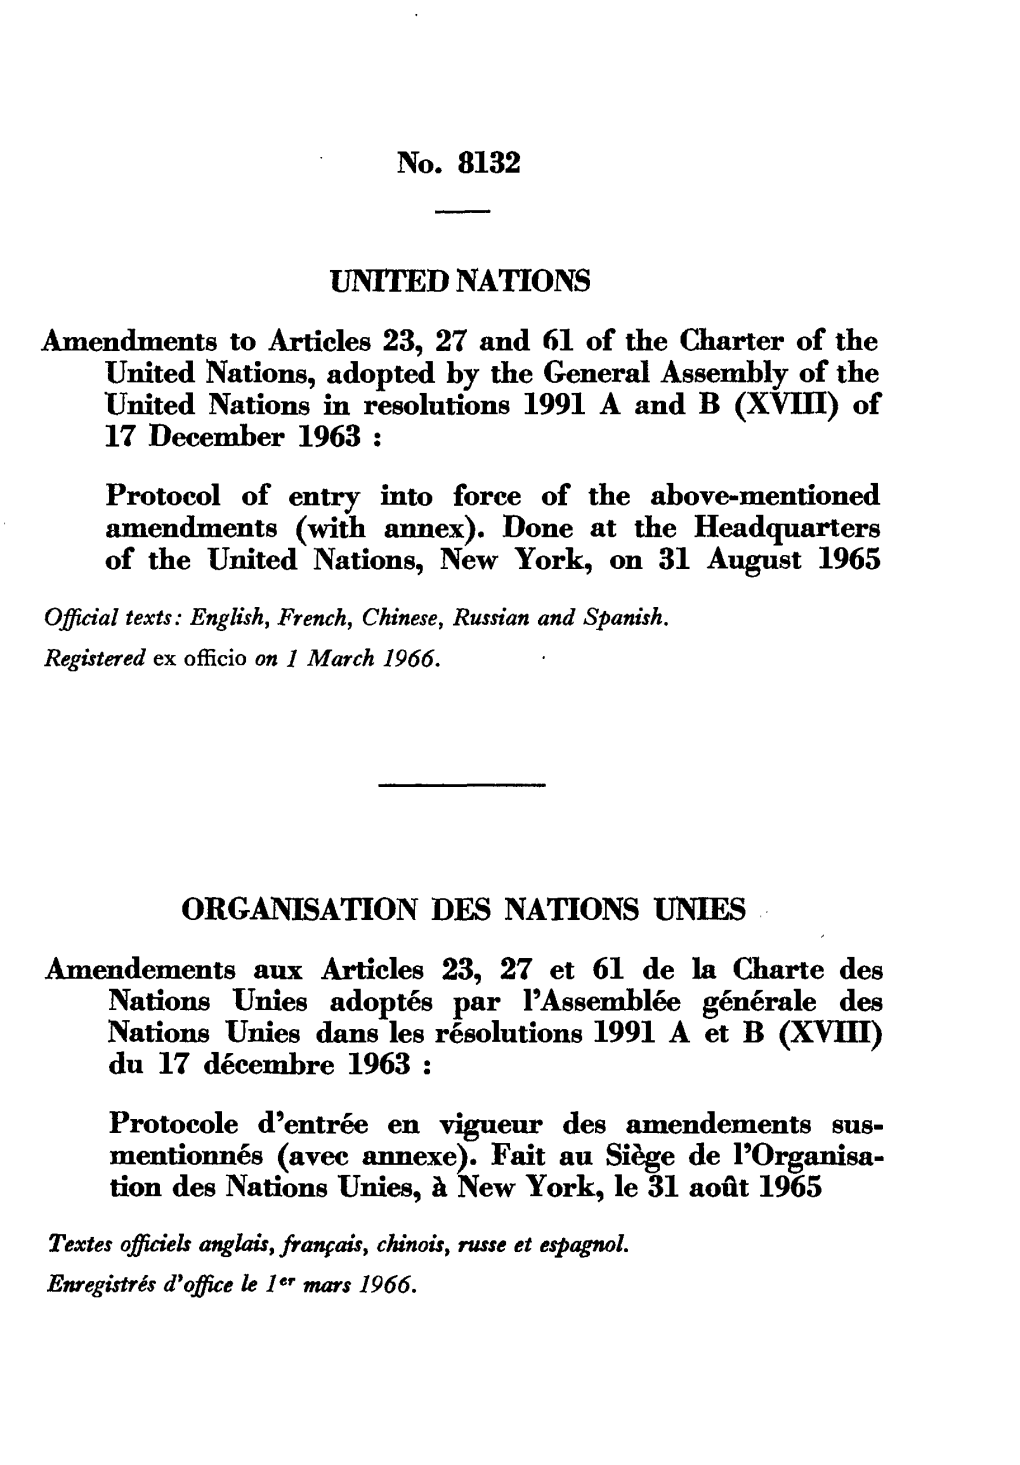 Organisation Des Nations Unies